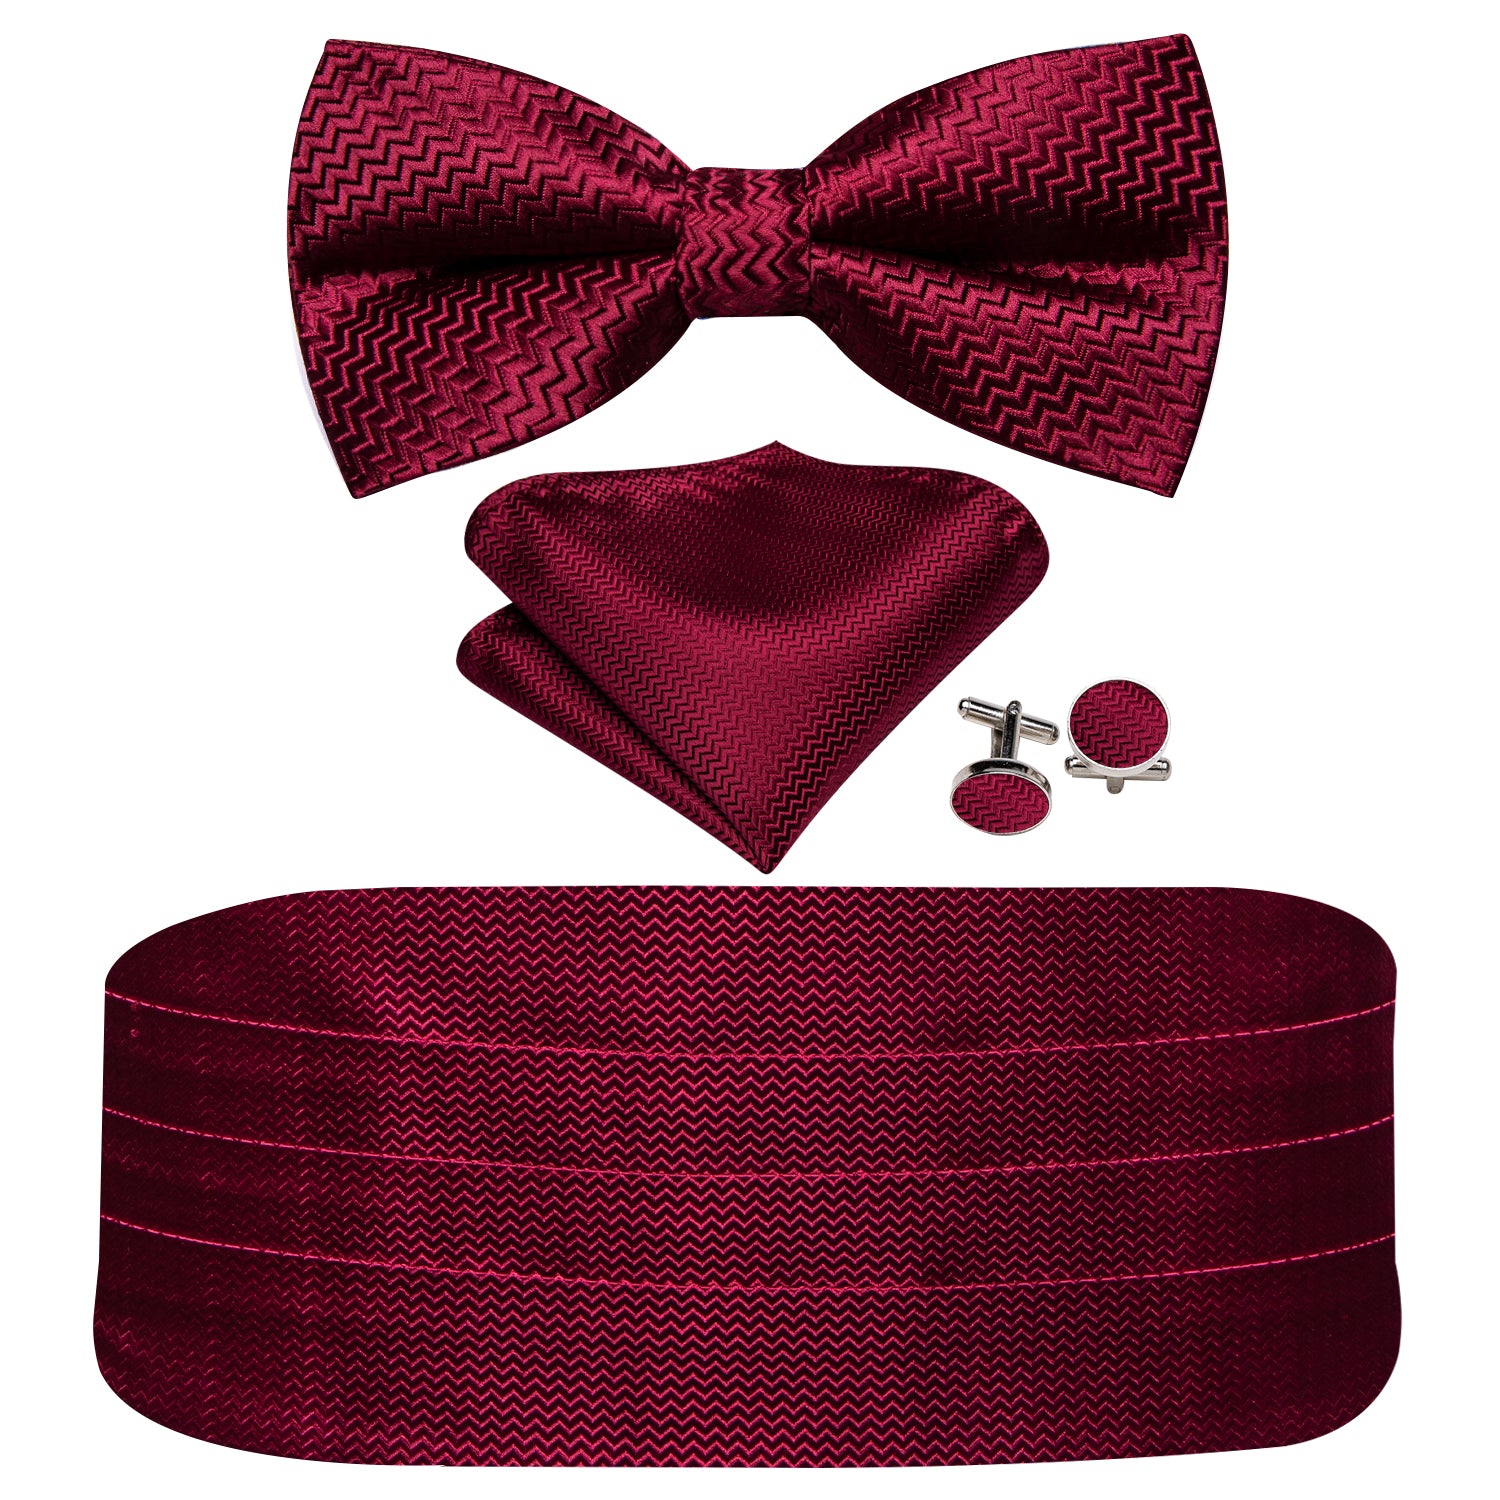 Barry.wang Red Bow Tie Solid Cummerbund Bow tie Handkerchief Cufflinks Set for Men